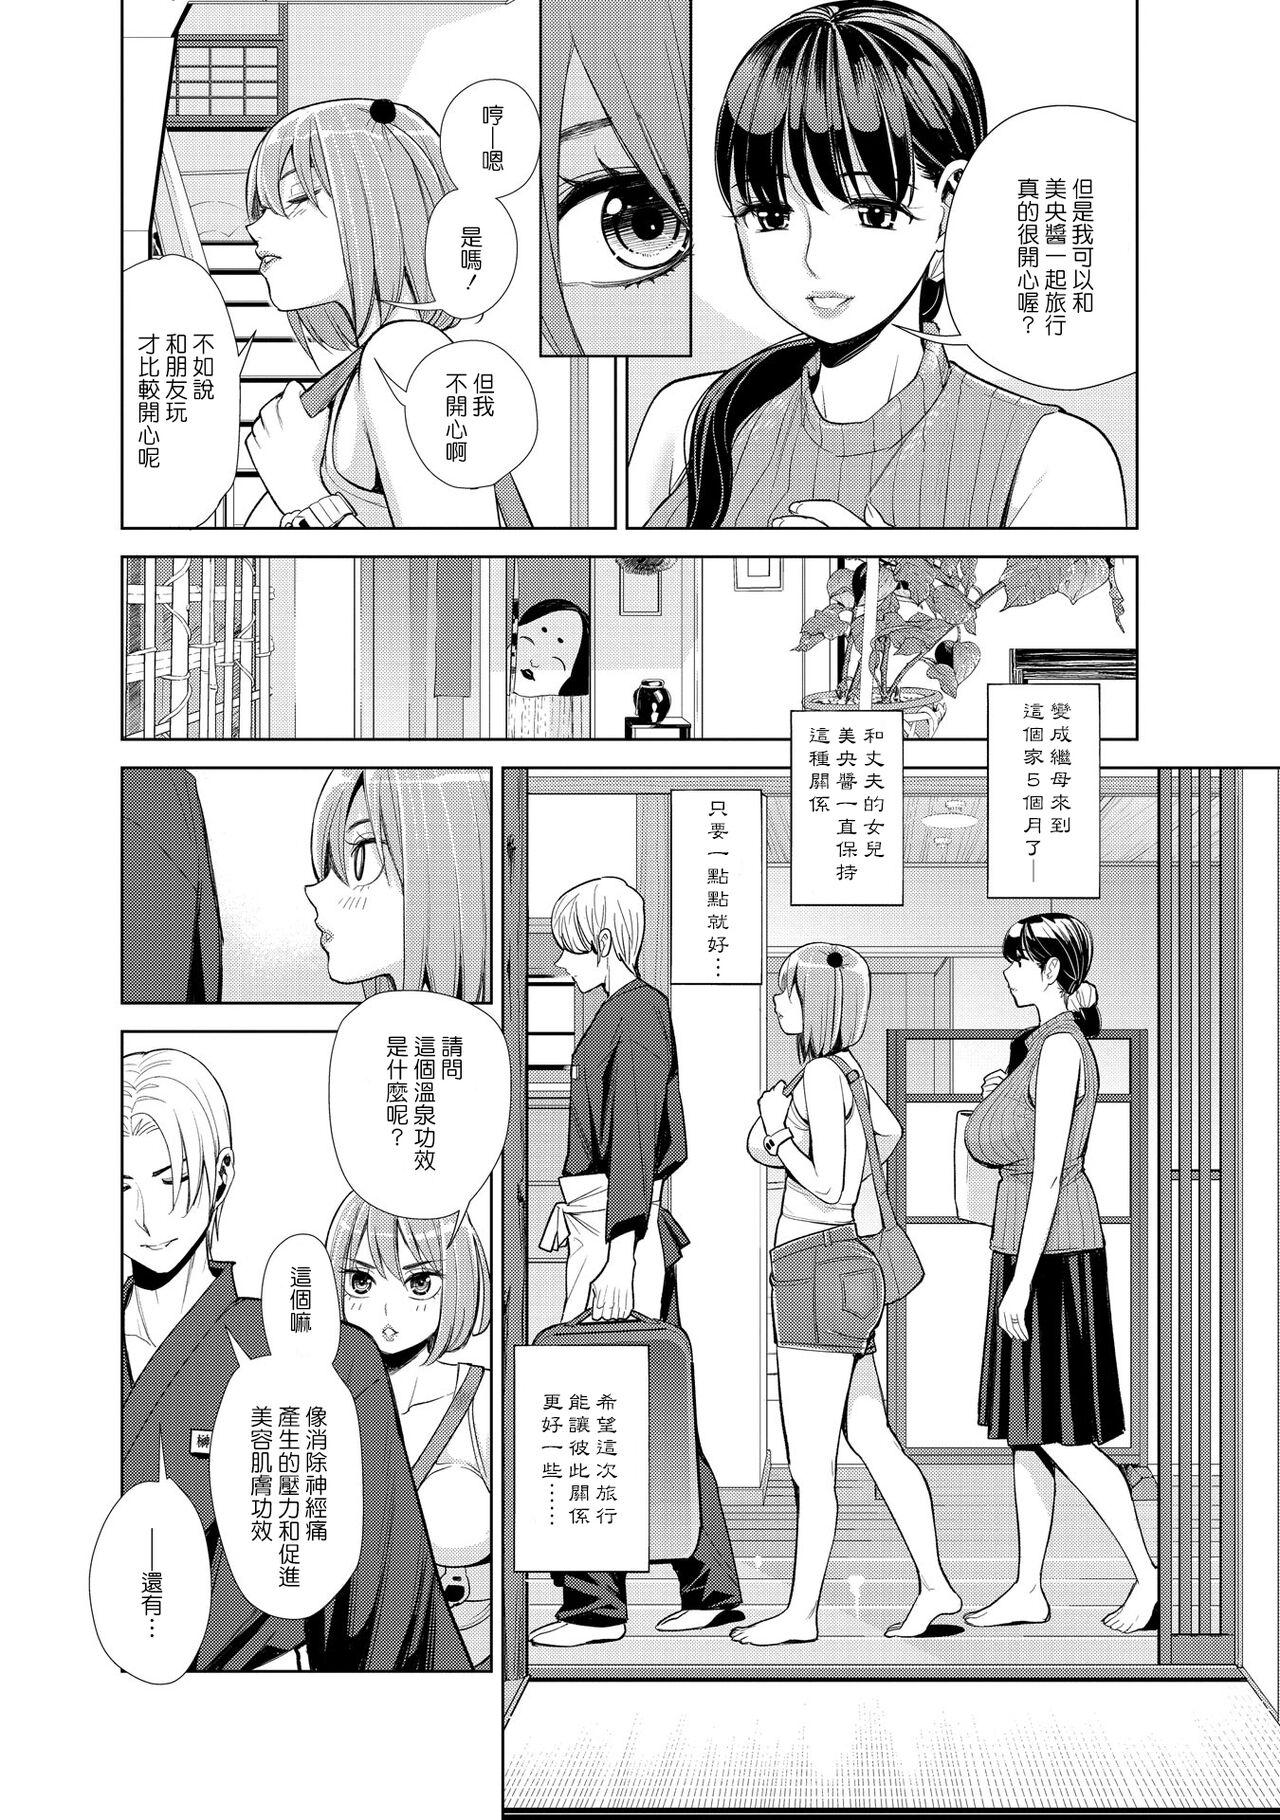 Threesome Nakayoku no yu e youkoso Muscles - Page 6